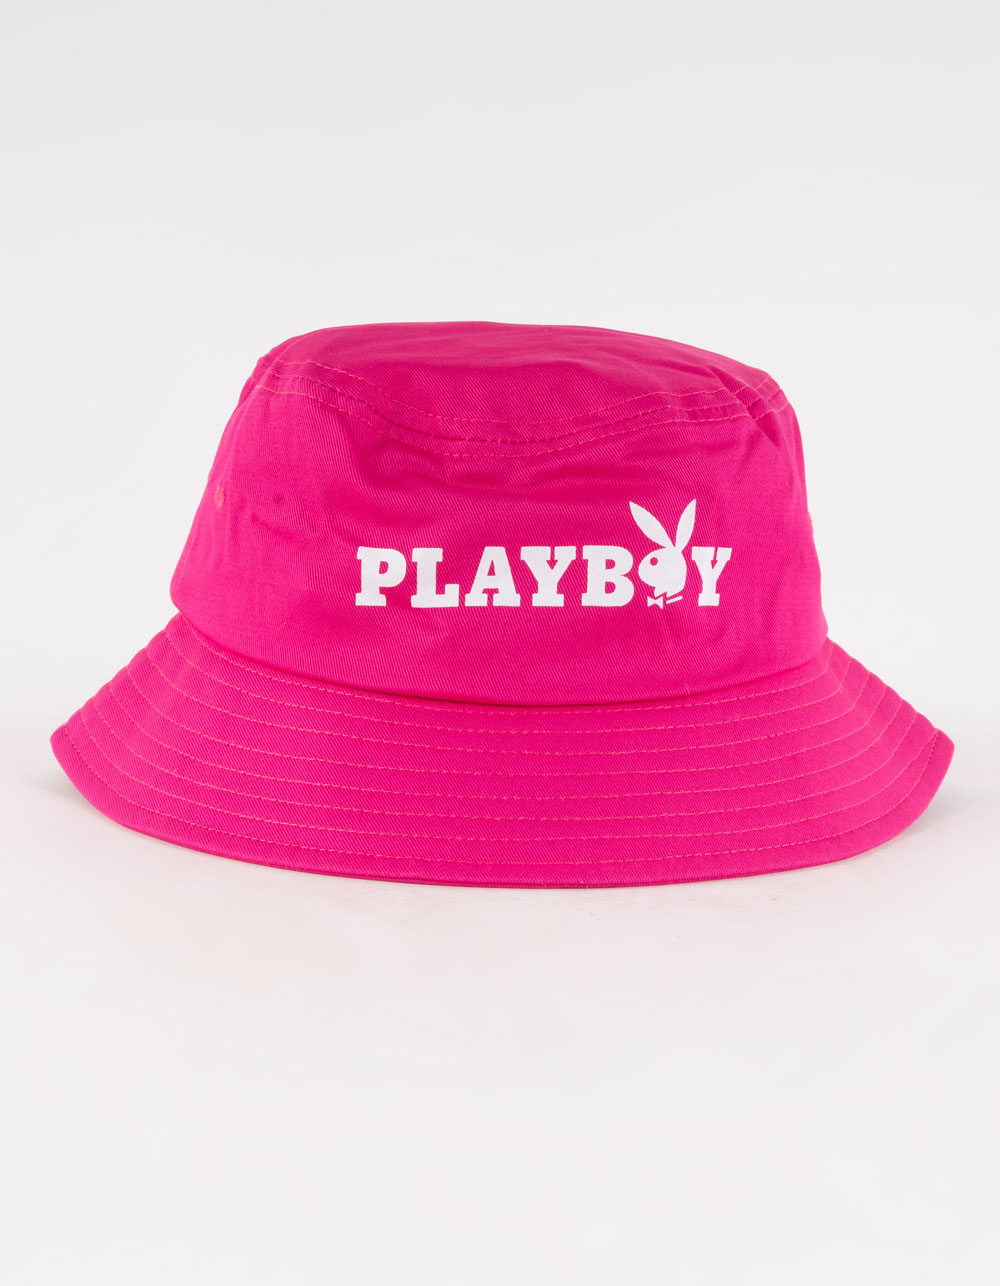 PLAYBOY Womens Bucket Hat